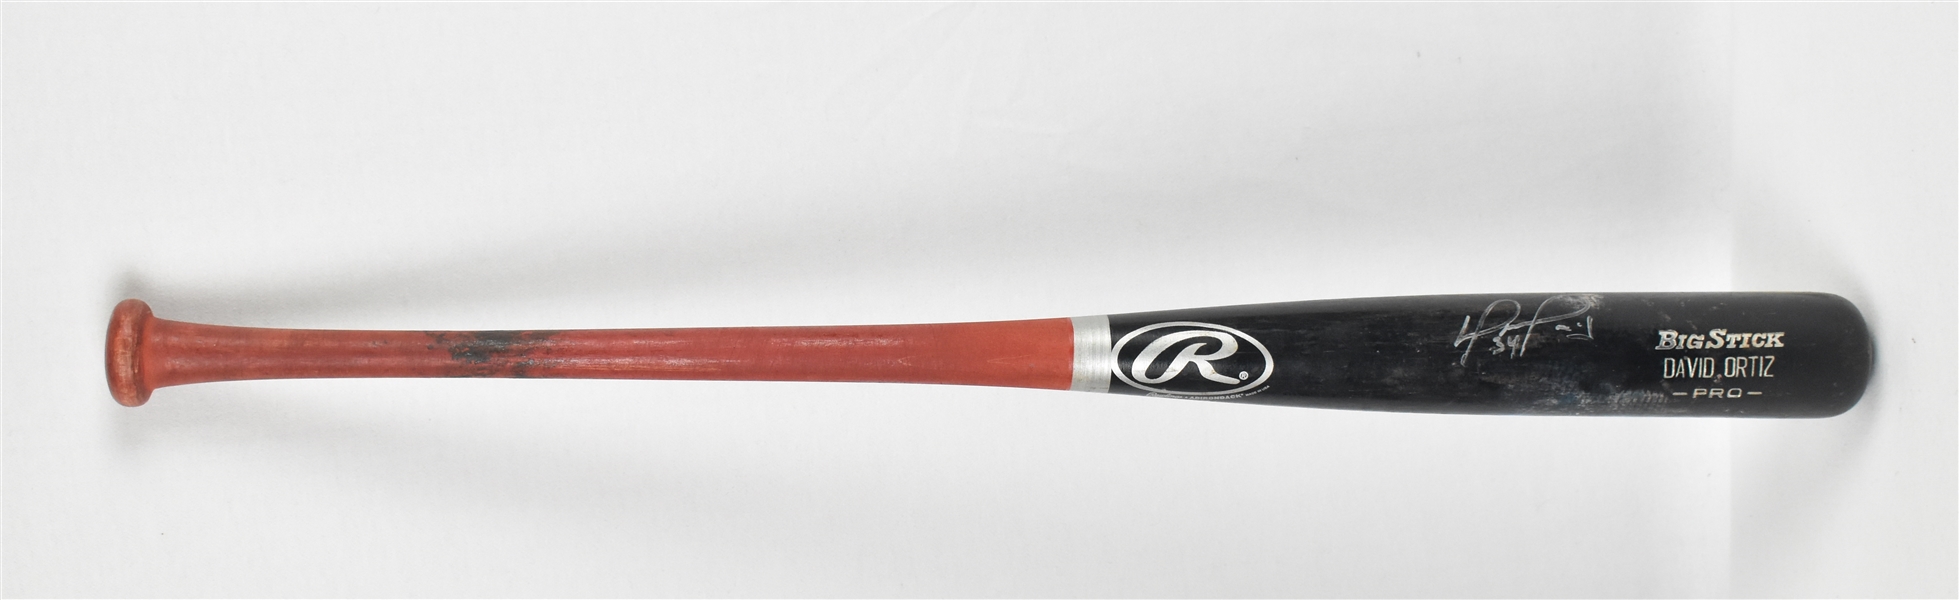 David Ortiz 2006 Boston Red Sox Game Used & Autographed Bat GU 10 PSA/DNA